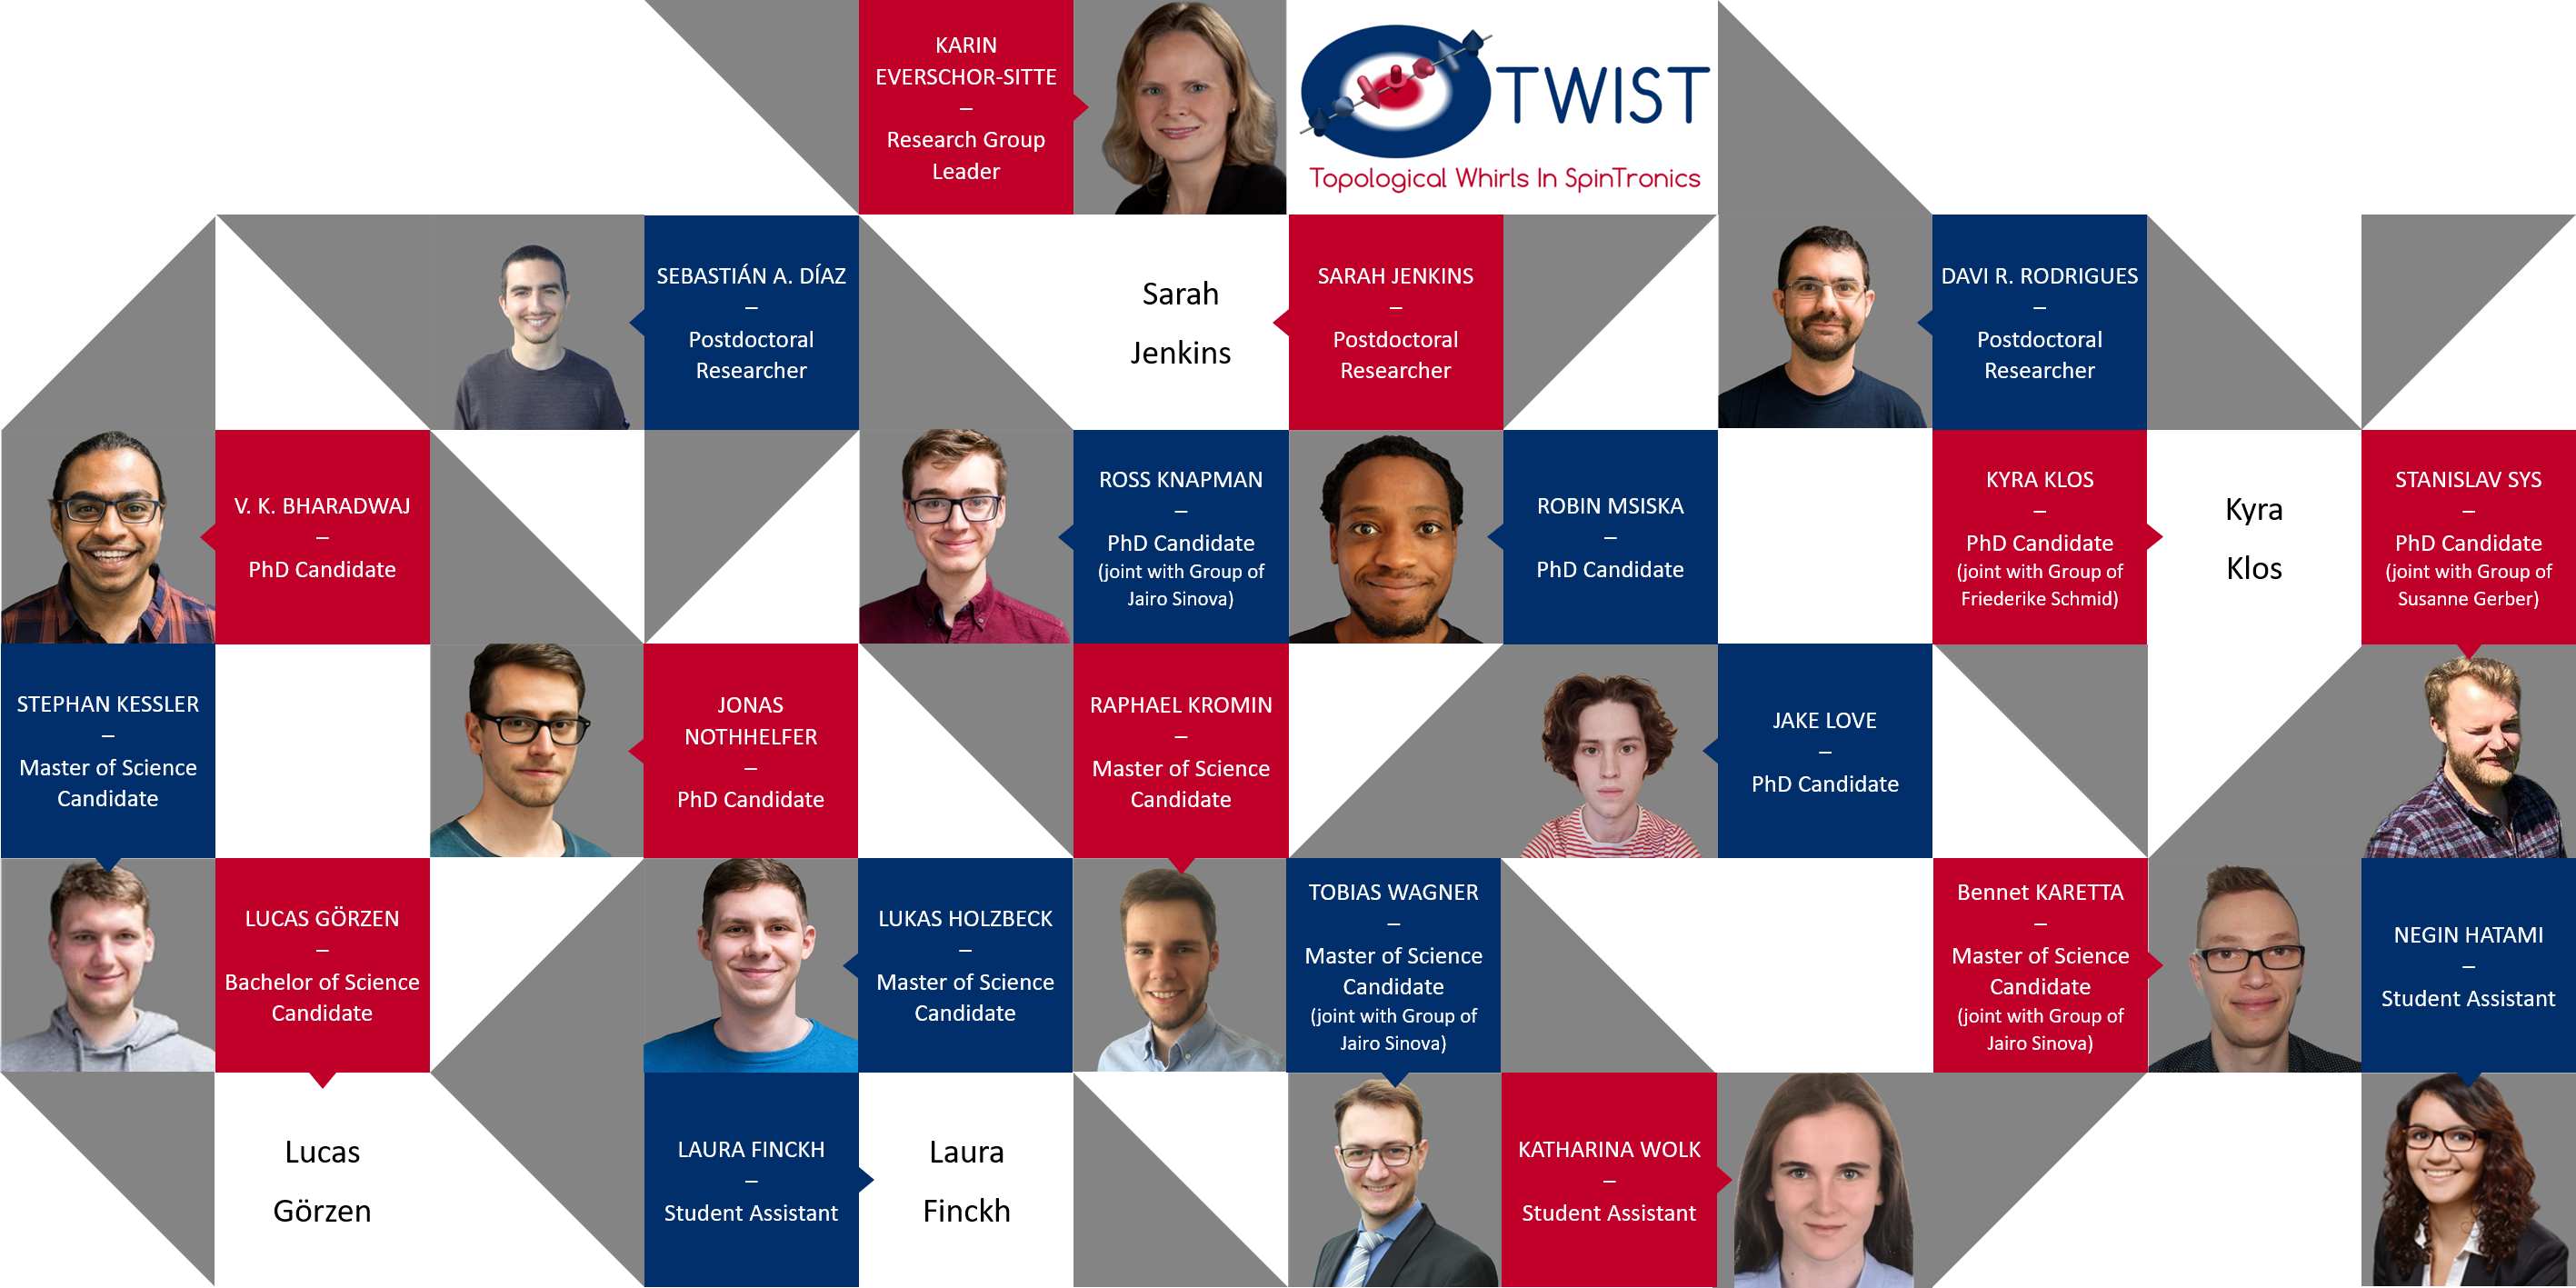 Twist Team